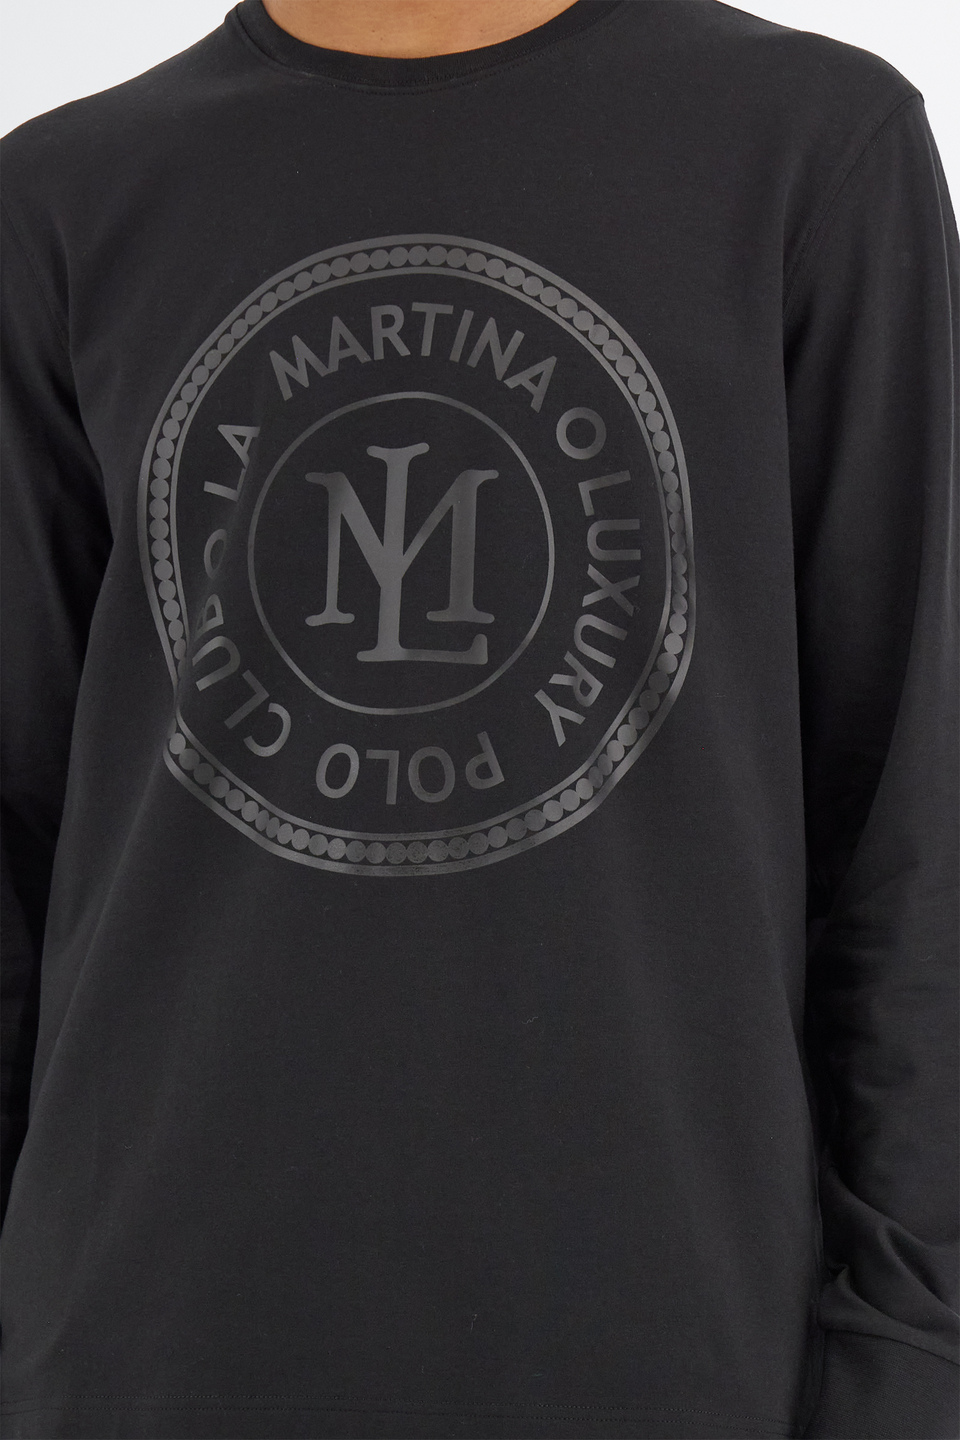 Camiseta de manga larga corte regular de cuello redondo para hombre | La Martina - Official Online Shop